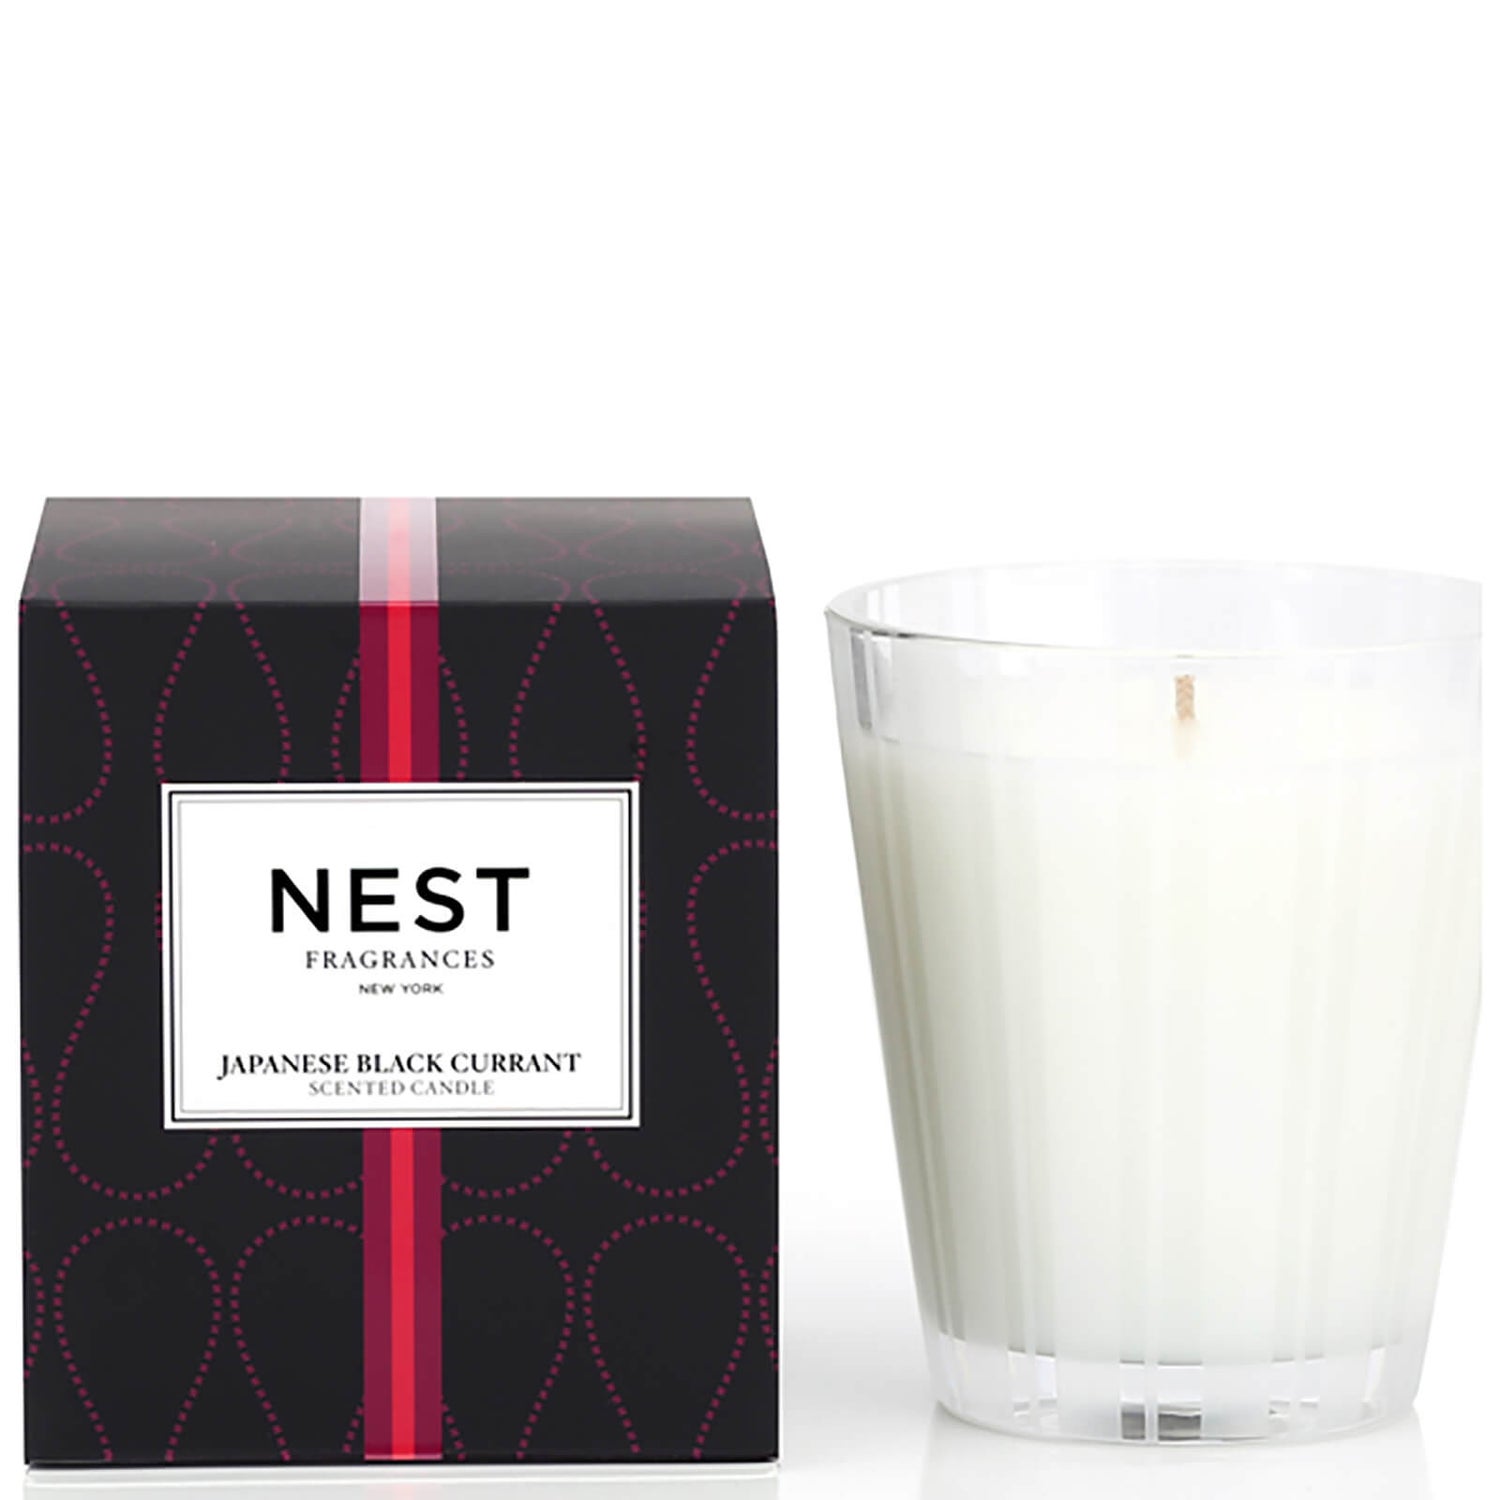 NEST Fragrances Japanese Black Currant Classic Candle